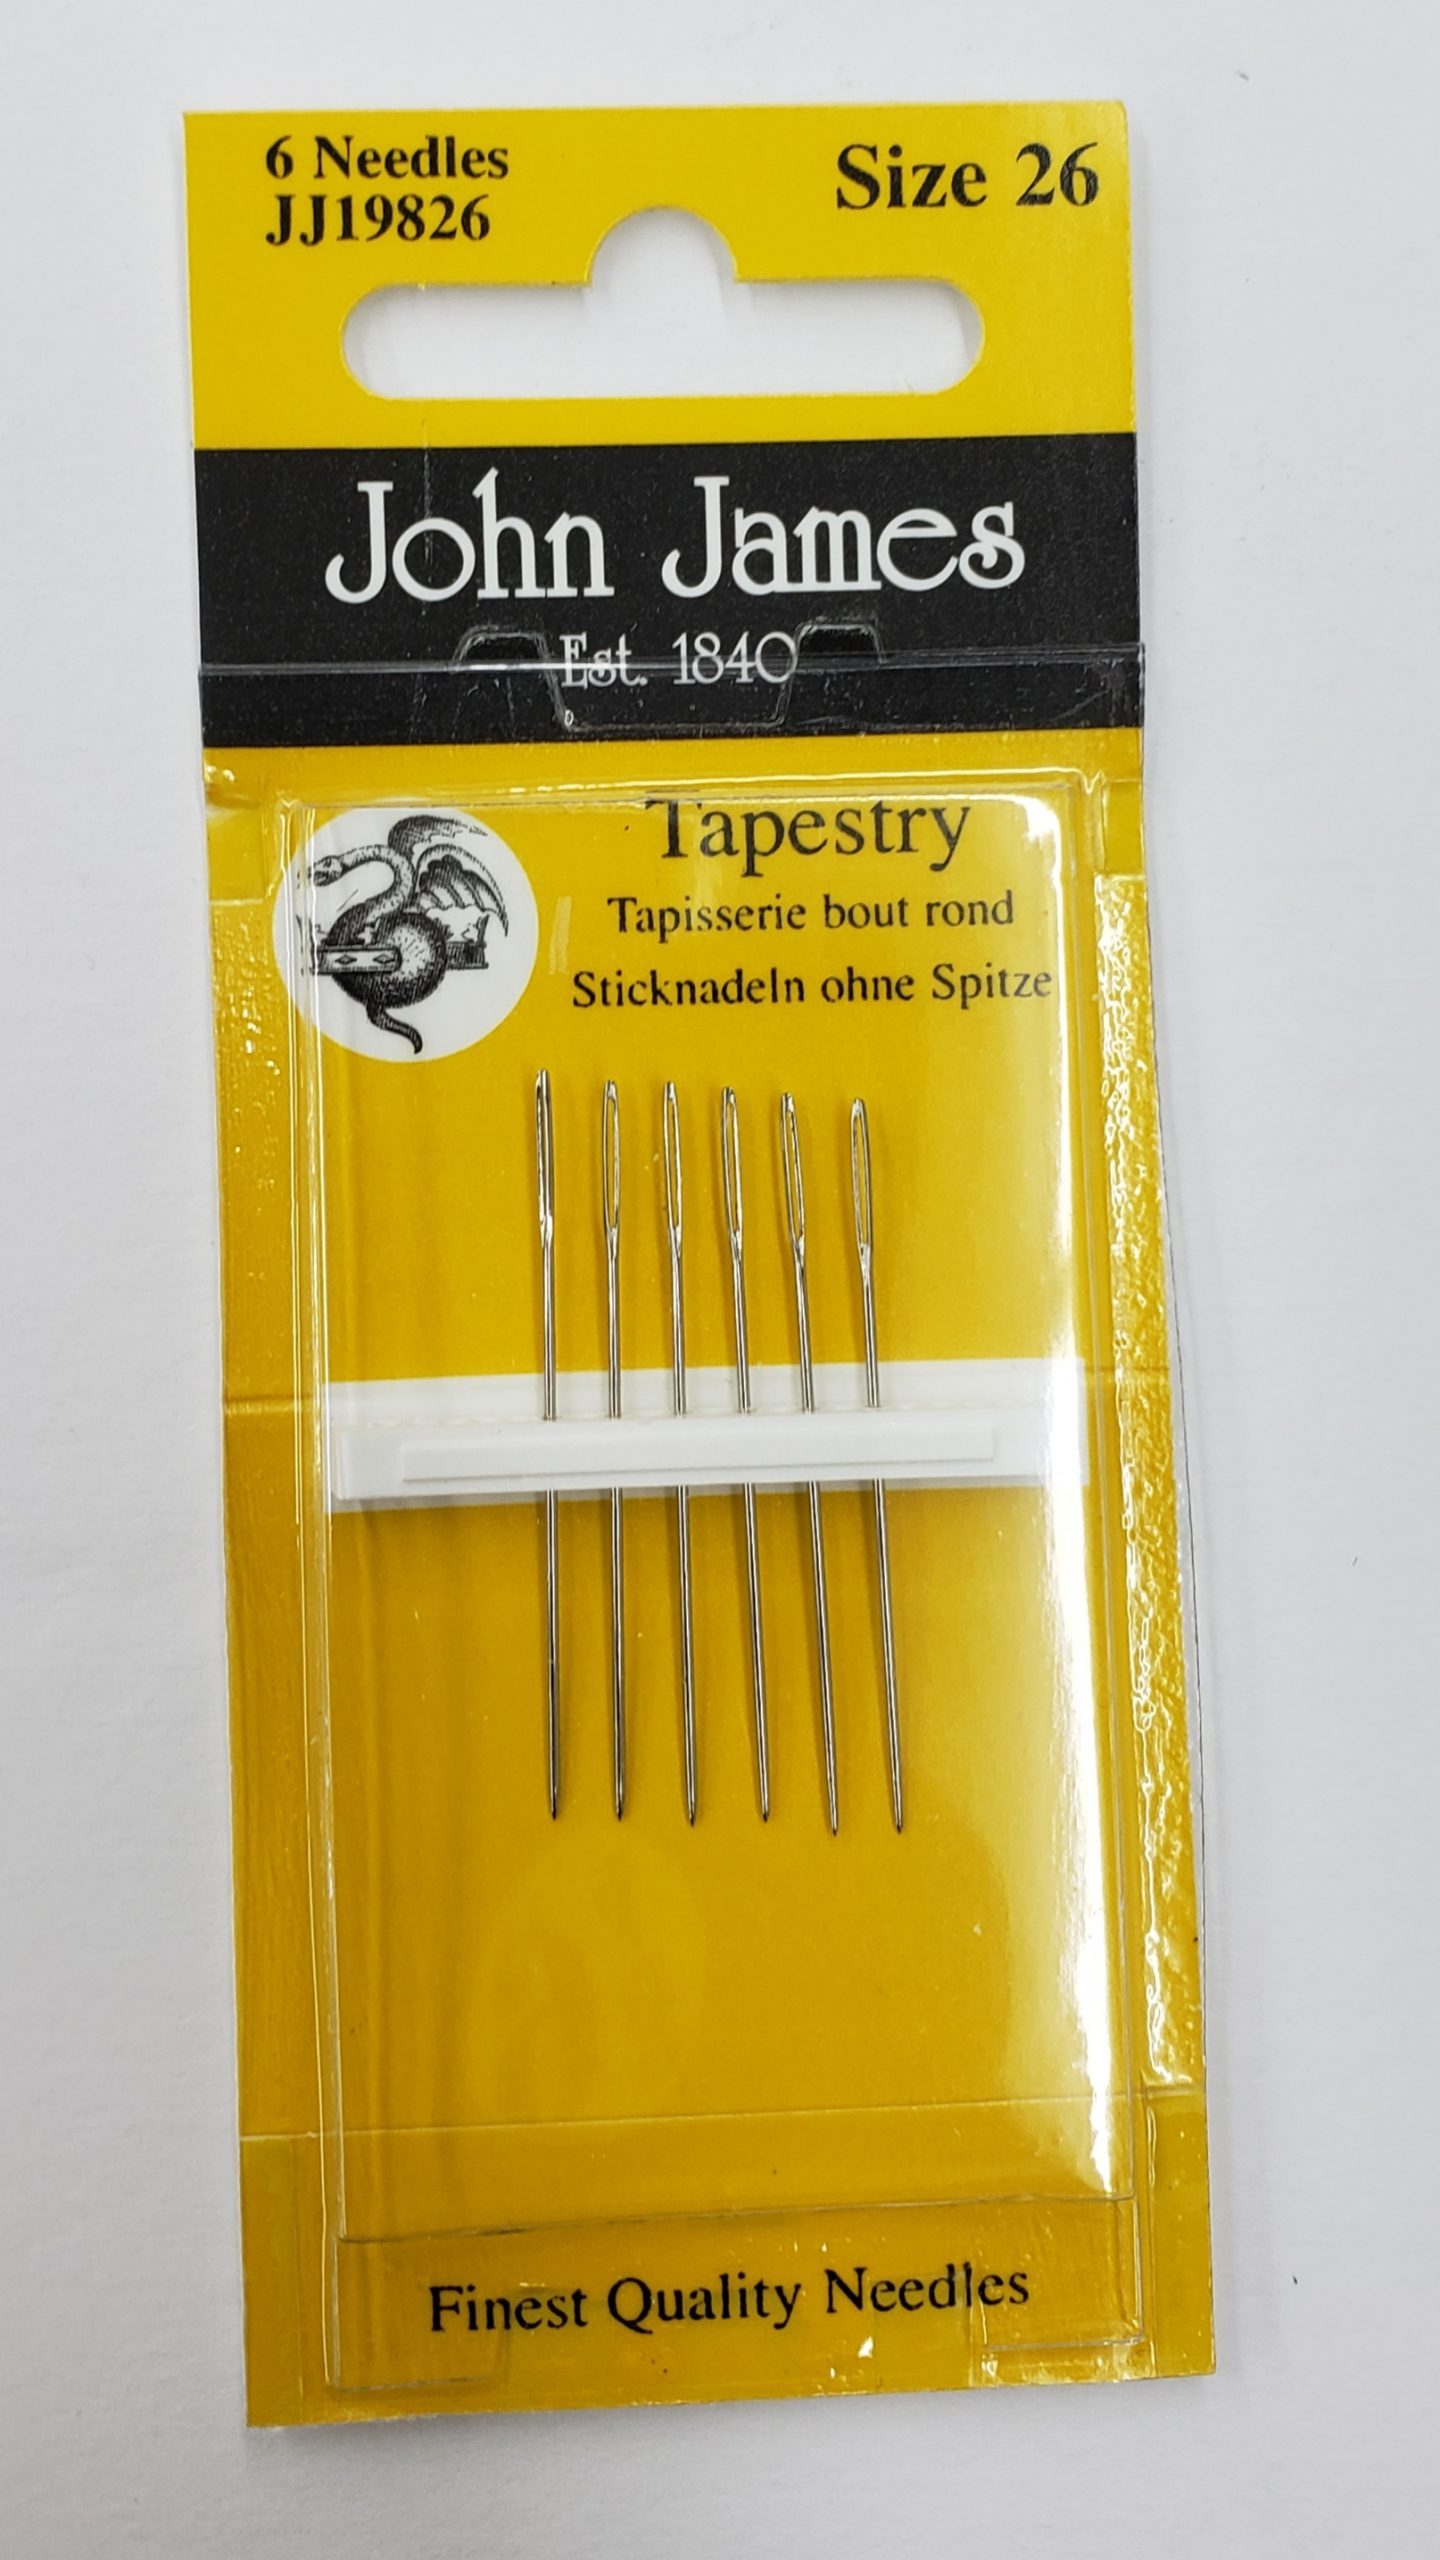 John James Size 24 Tapestry Needles